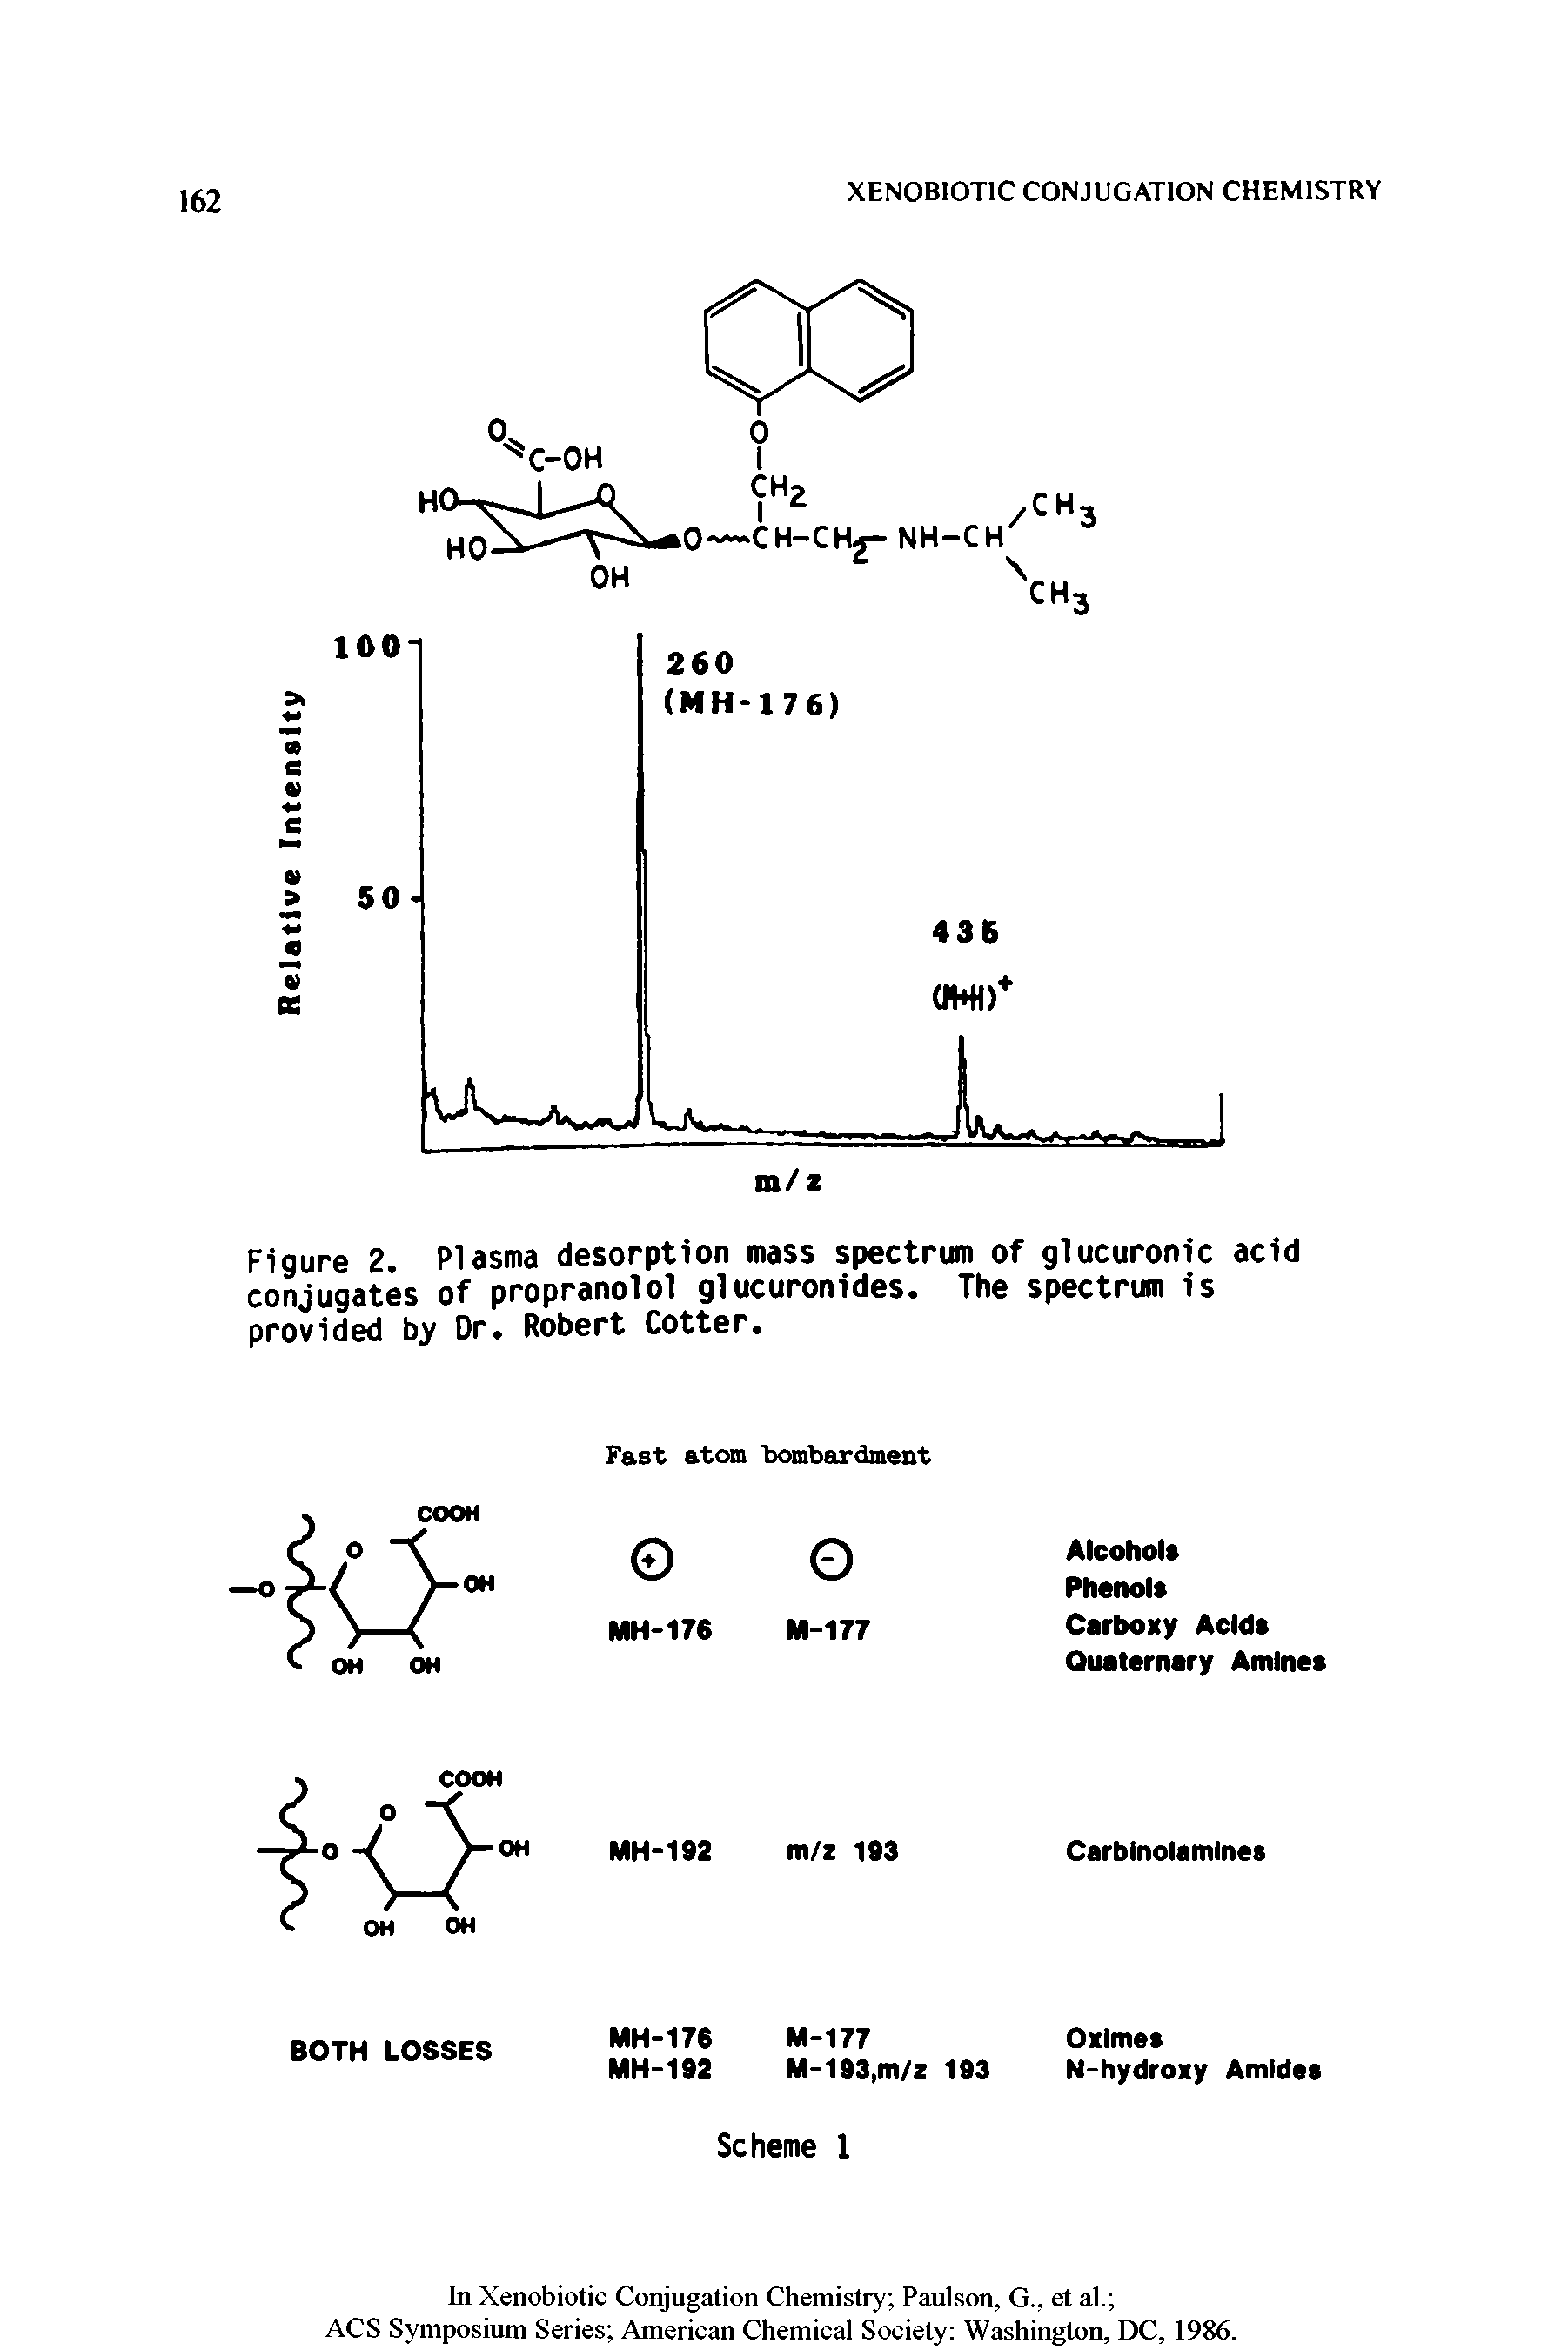 Figure 2 Plasma desorption mass spectrum of glucuronic acid conjugates of propranolol glucuronldes. The spectrum is provided by Dr. Robert Cotter.